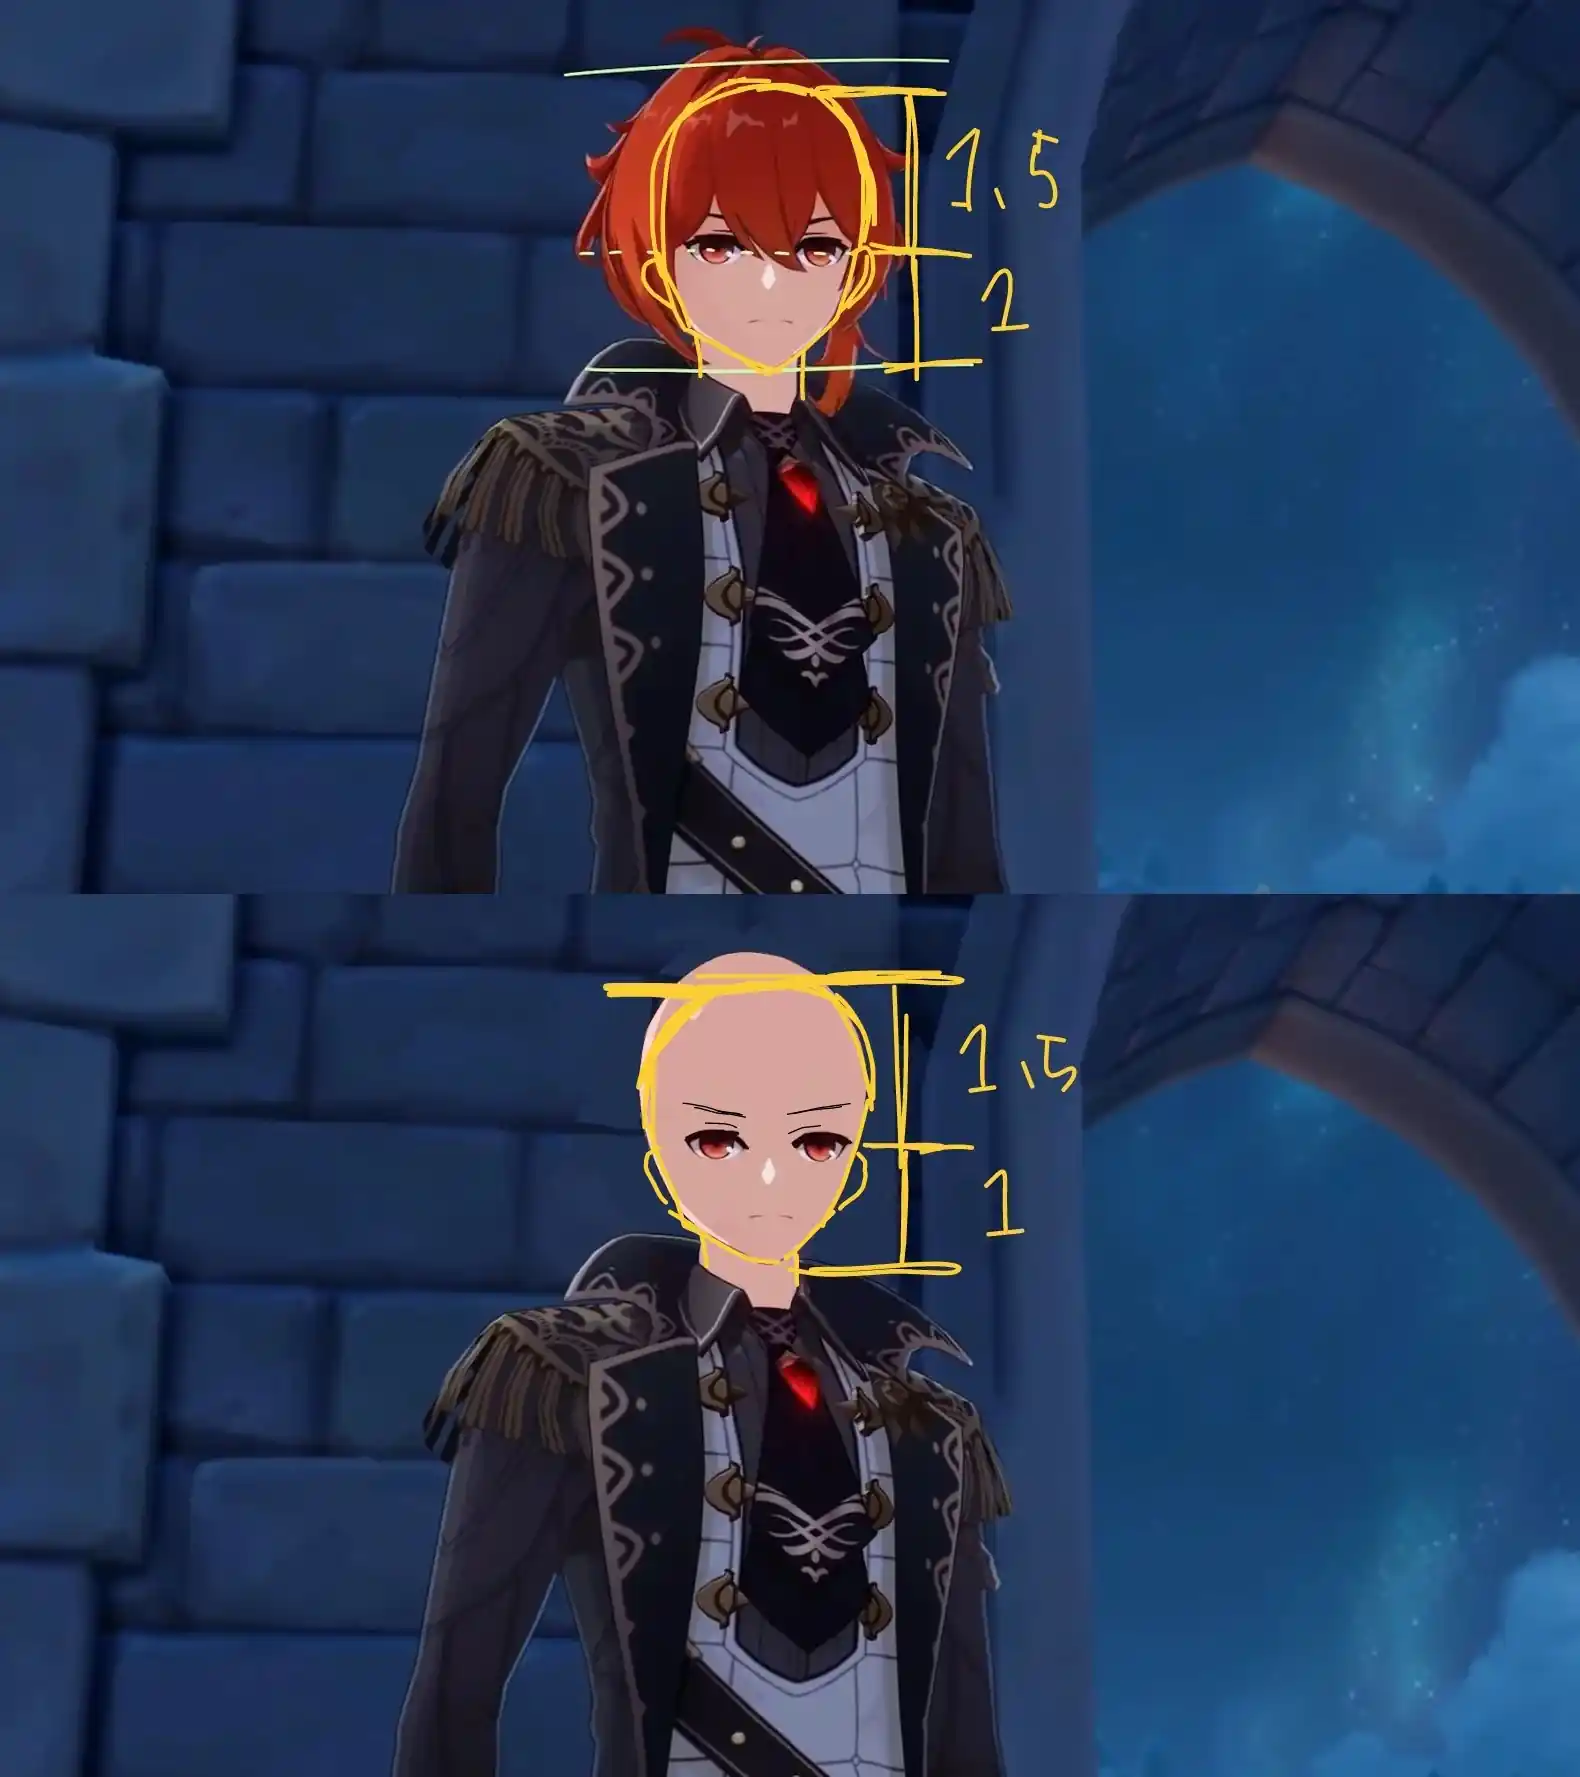 head size of genshin impact characters